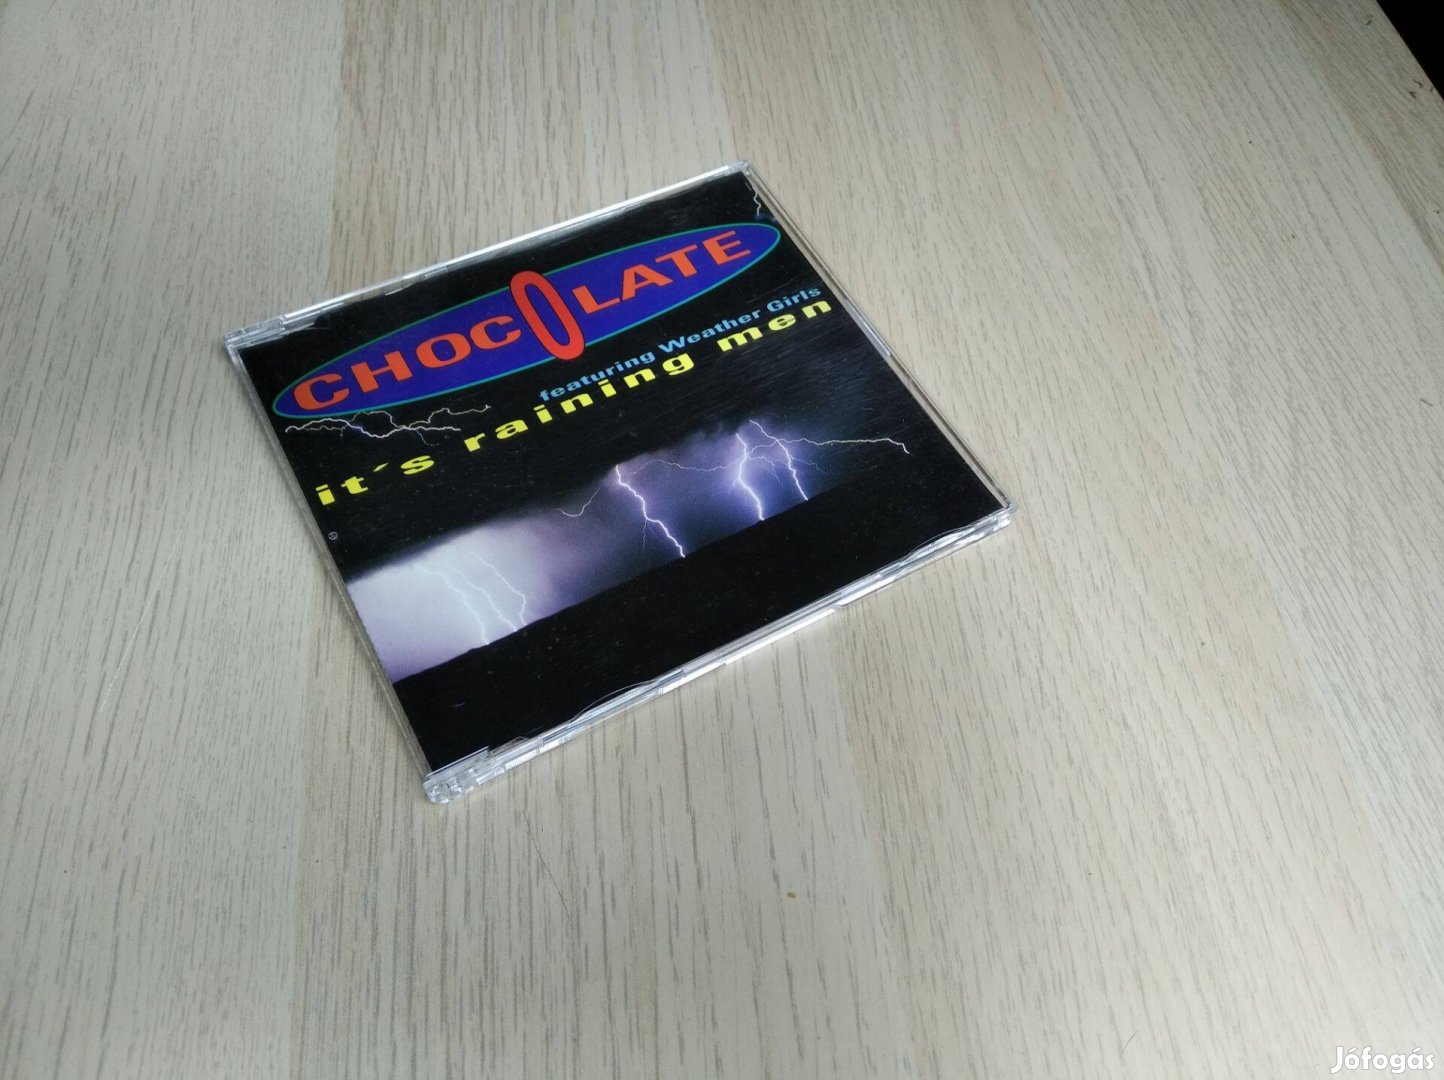 Chocolate Featuring Weather Girls - It's Raining Men / Maxi CD 19939